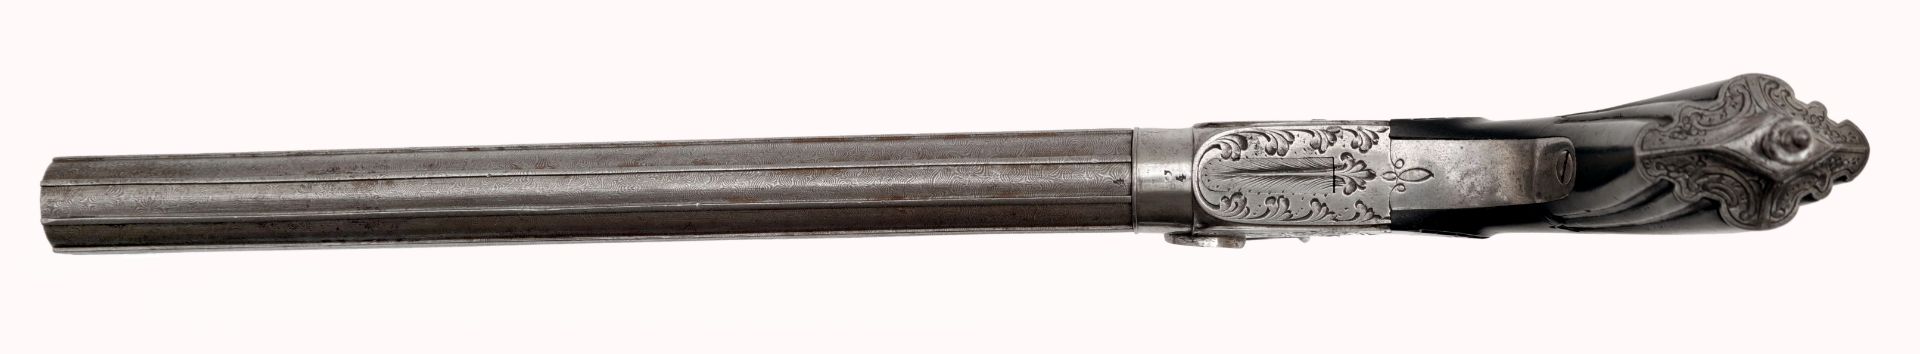 A Percussion Cap Pocket Pistol with Long Barrel - Image 5 of 7